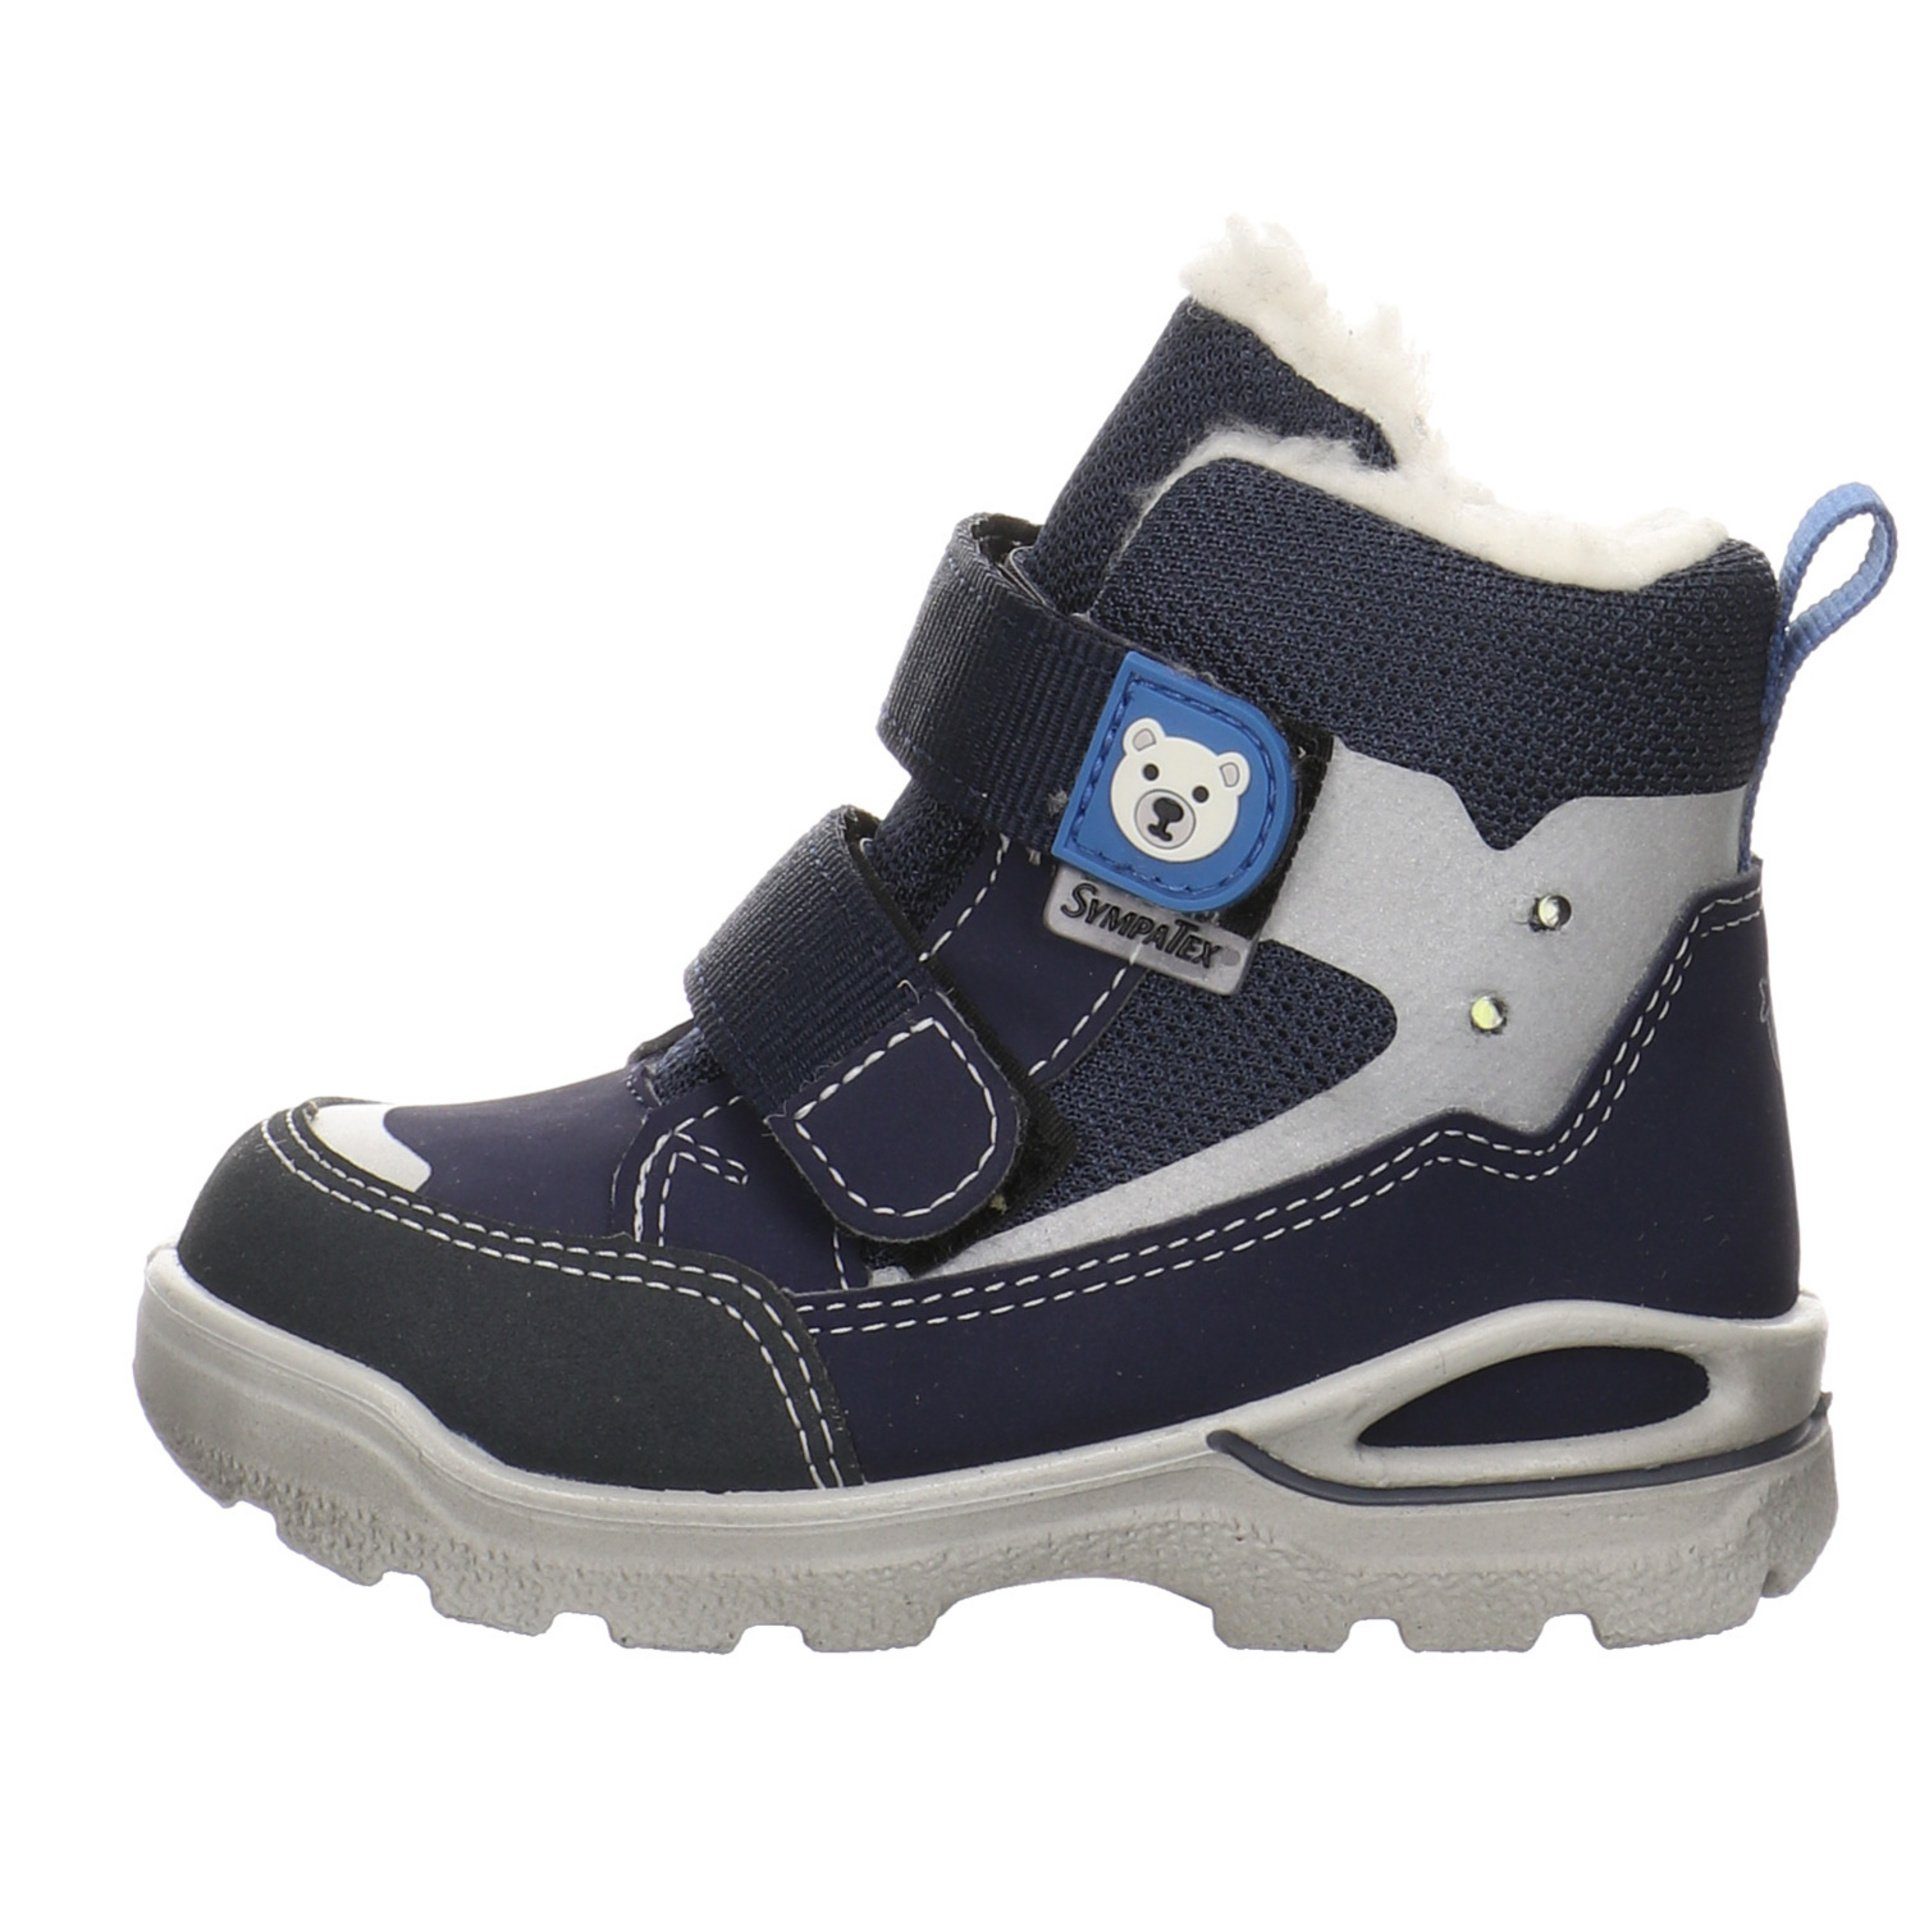 Jungen Synthetikkombination (170) nautic/ozean Kinderschuhe Schuhe Benno Sneaker Sneaker Ricosta Boots